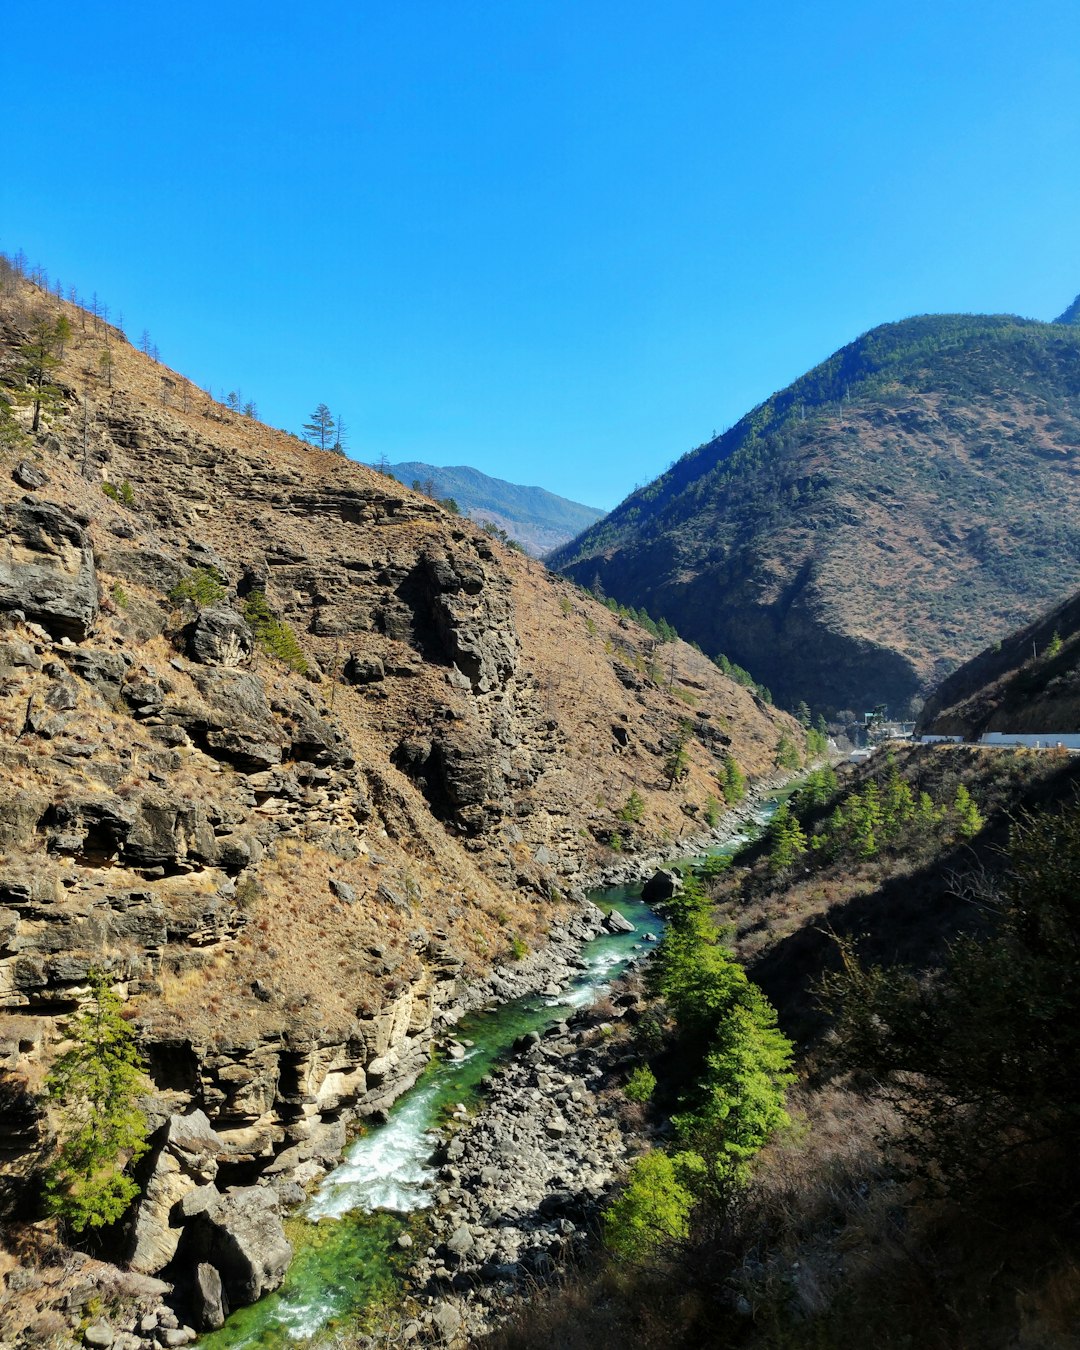 travelers stories about Mountain in Paro, Bhutan